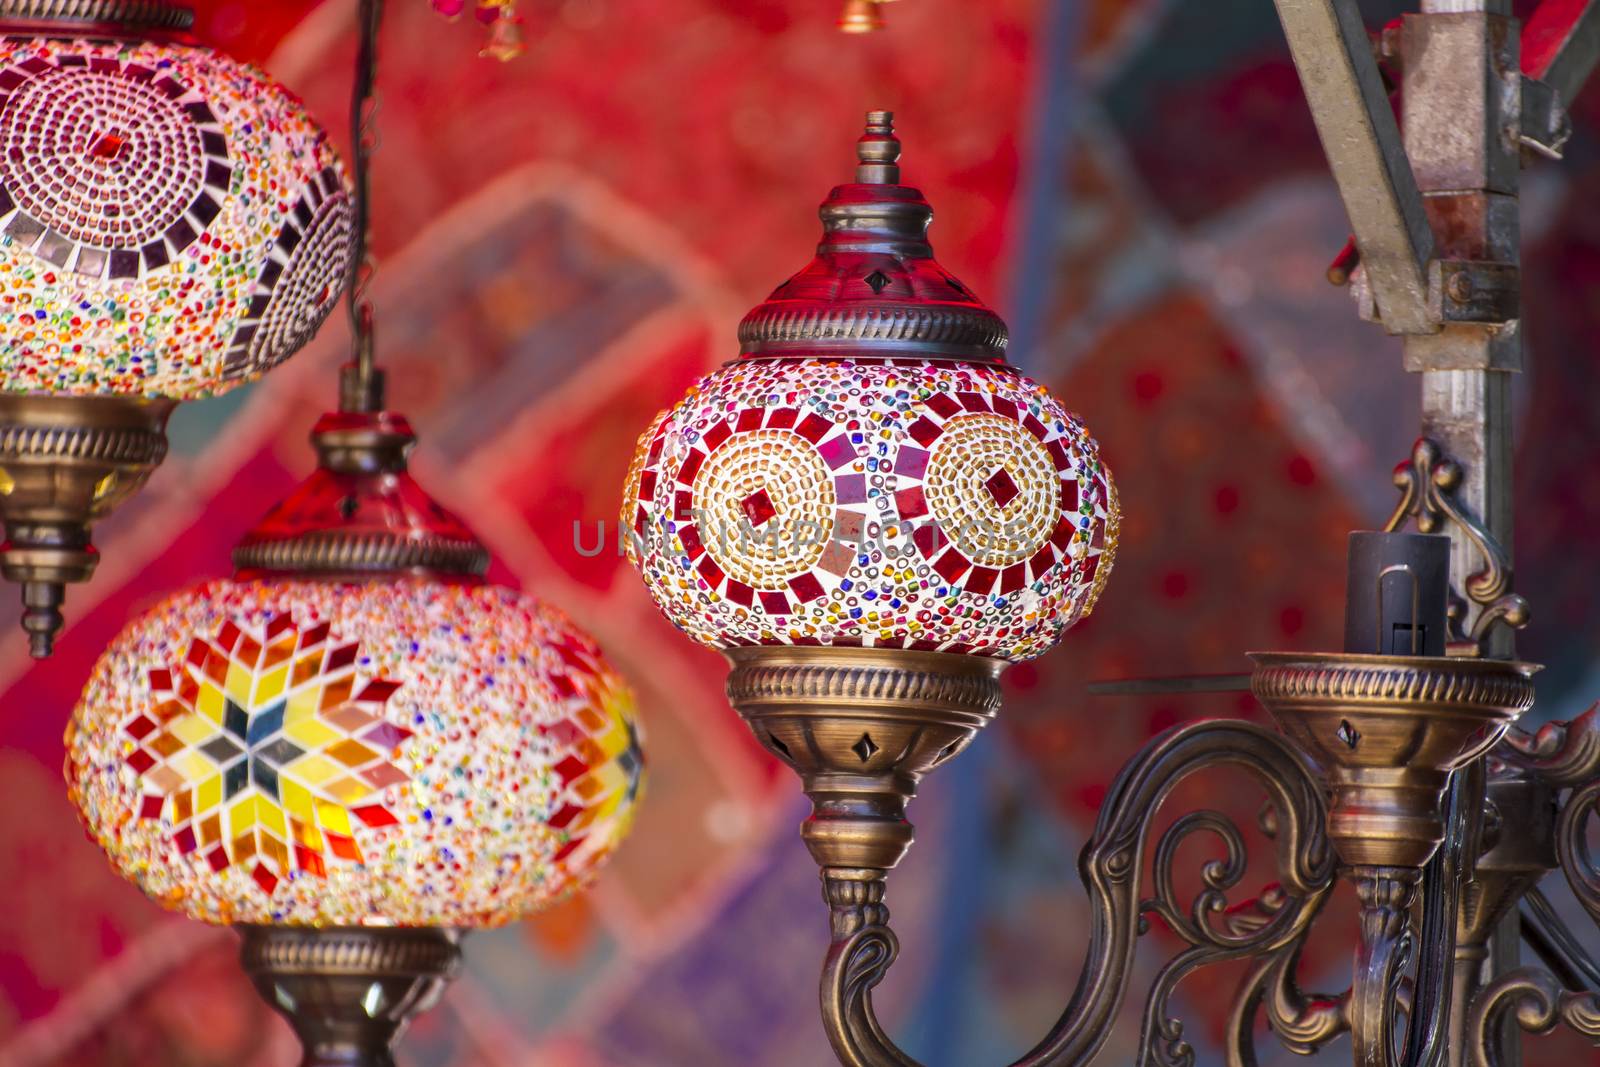 Souvenir, Oriental style lamps craft in a bazaar by FernandoCortes